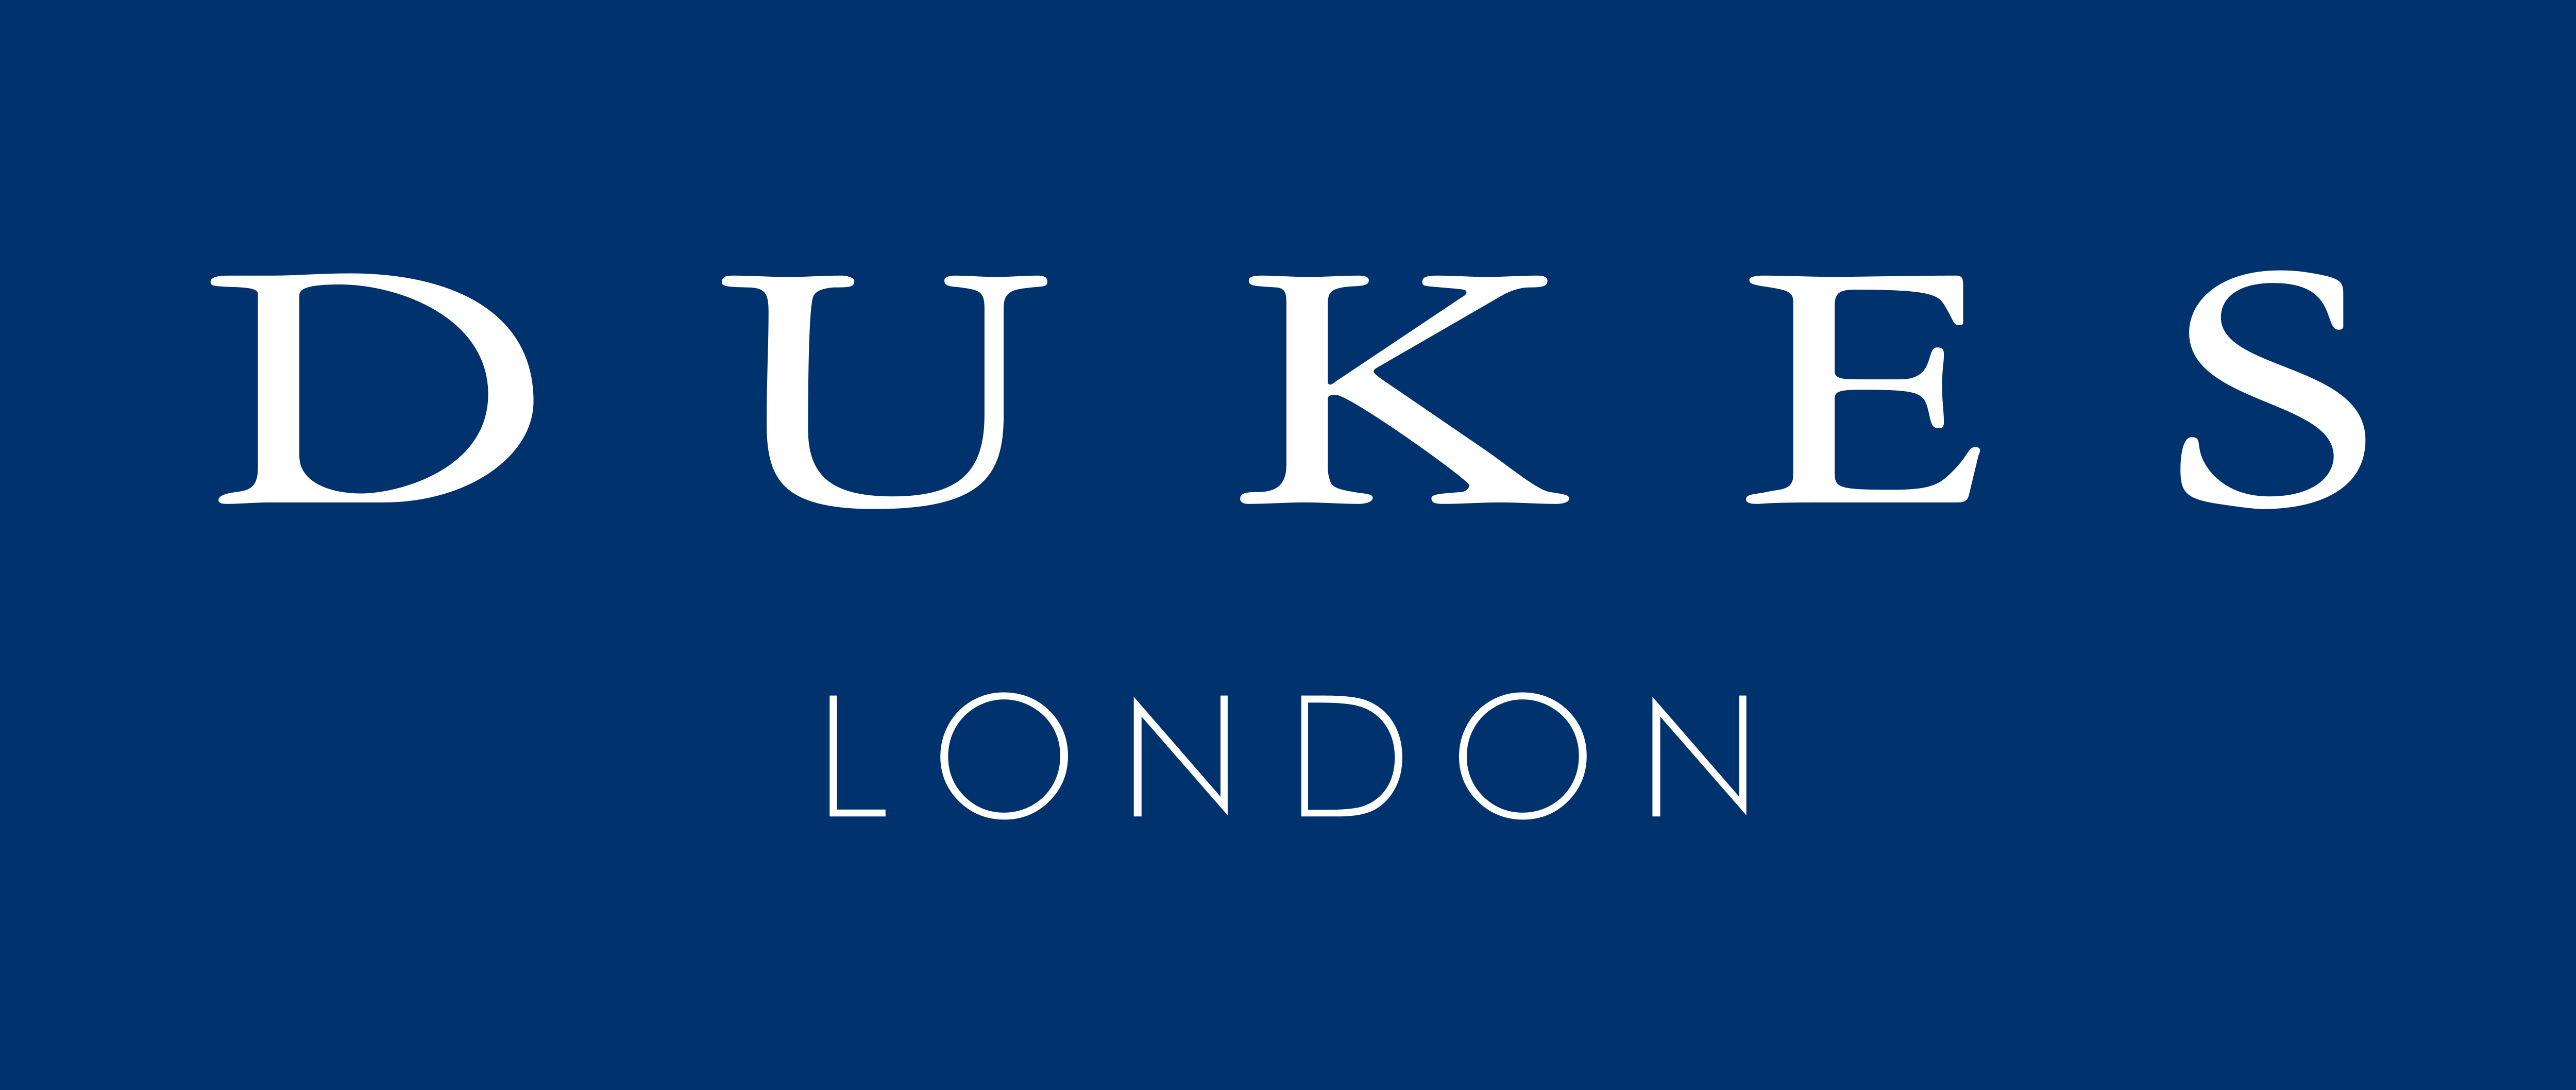 Dukes London – Logos Download